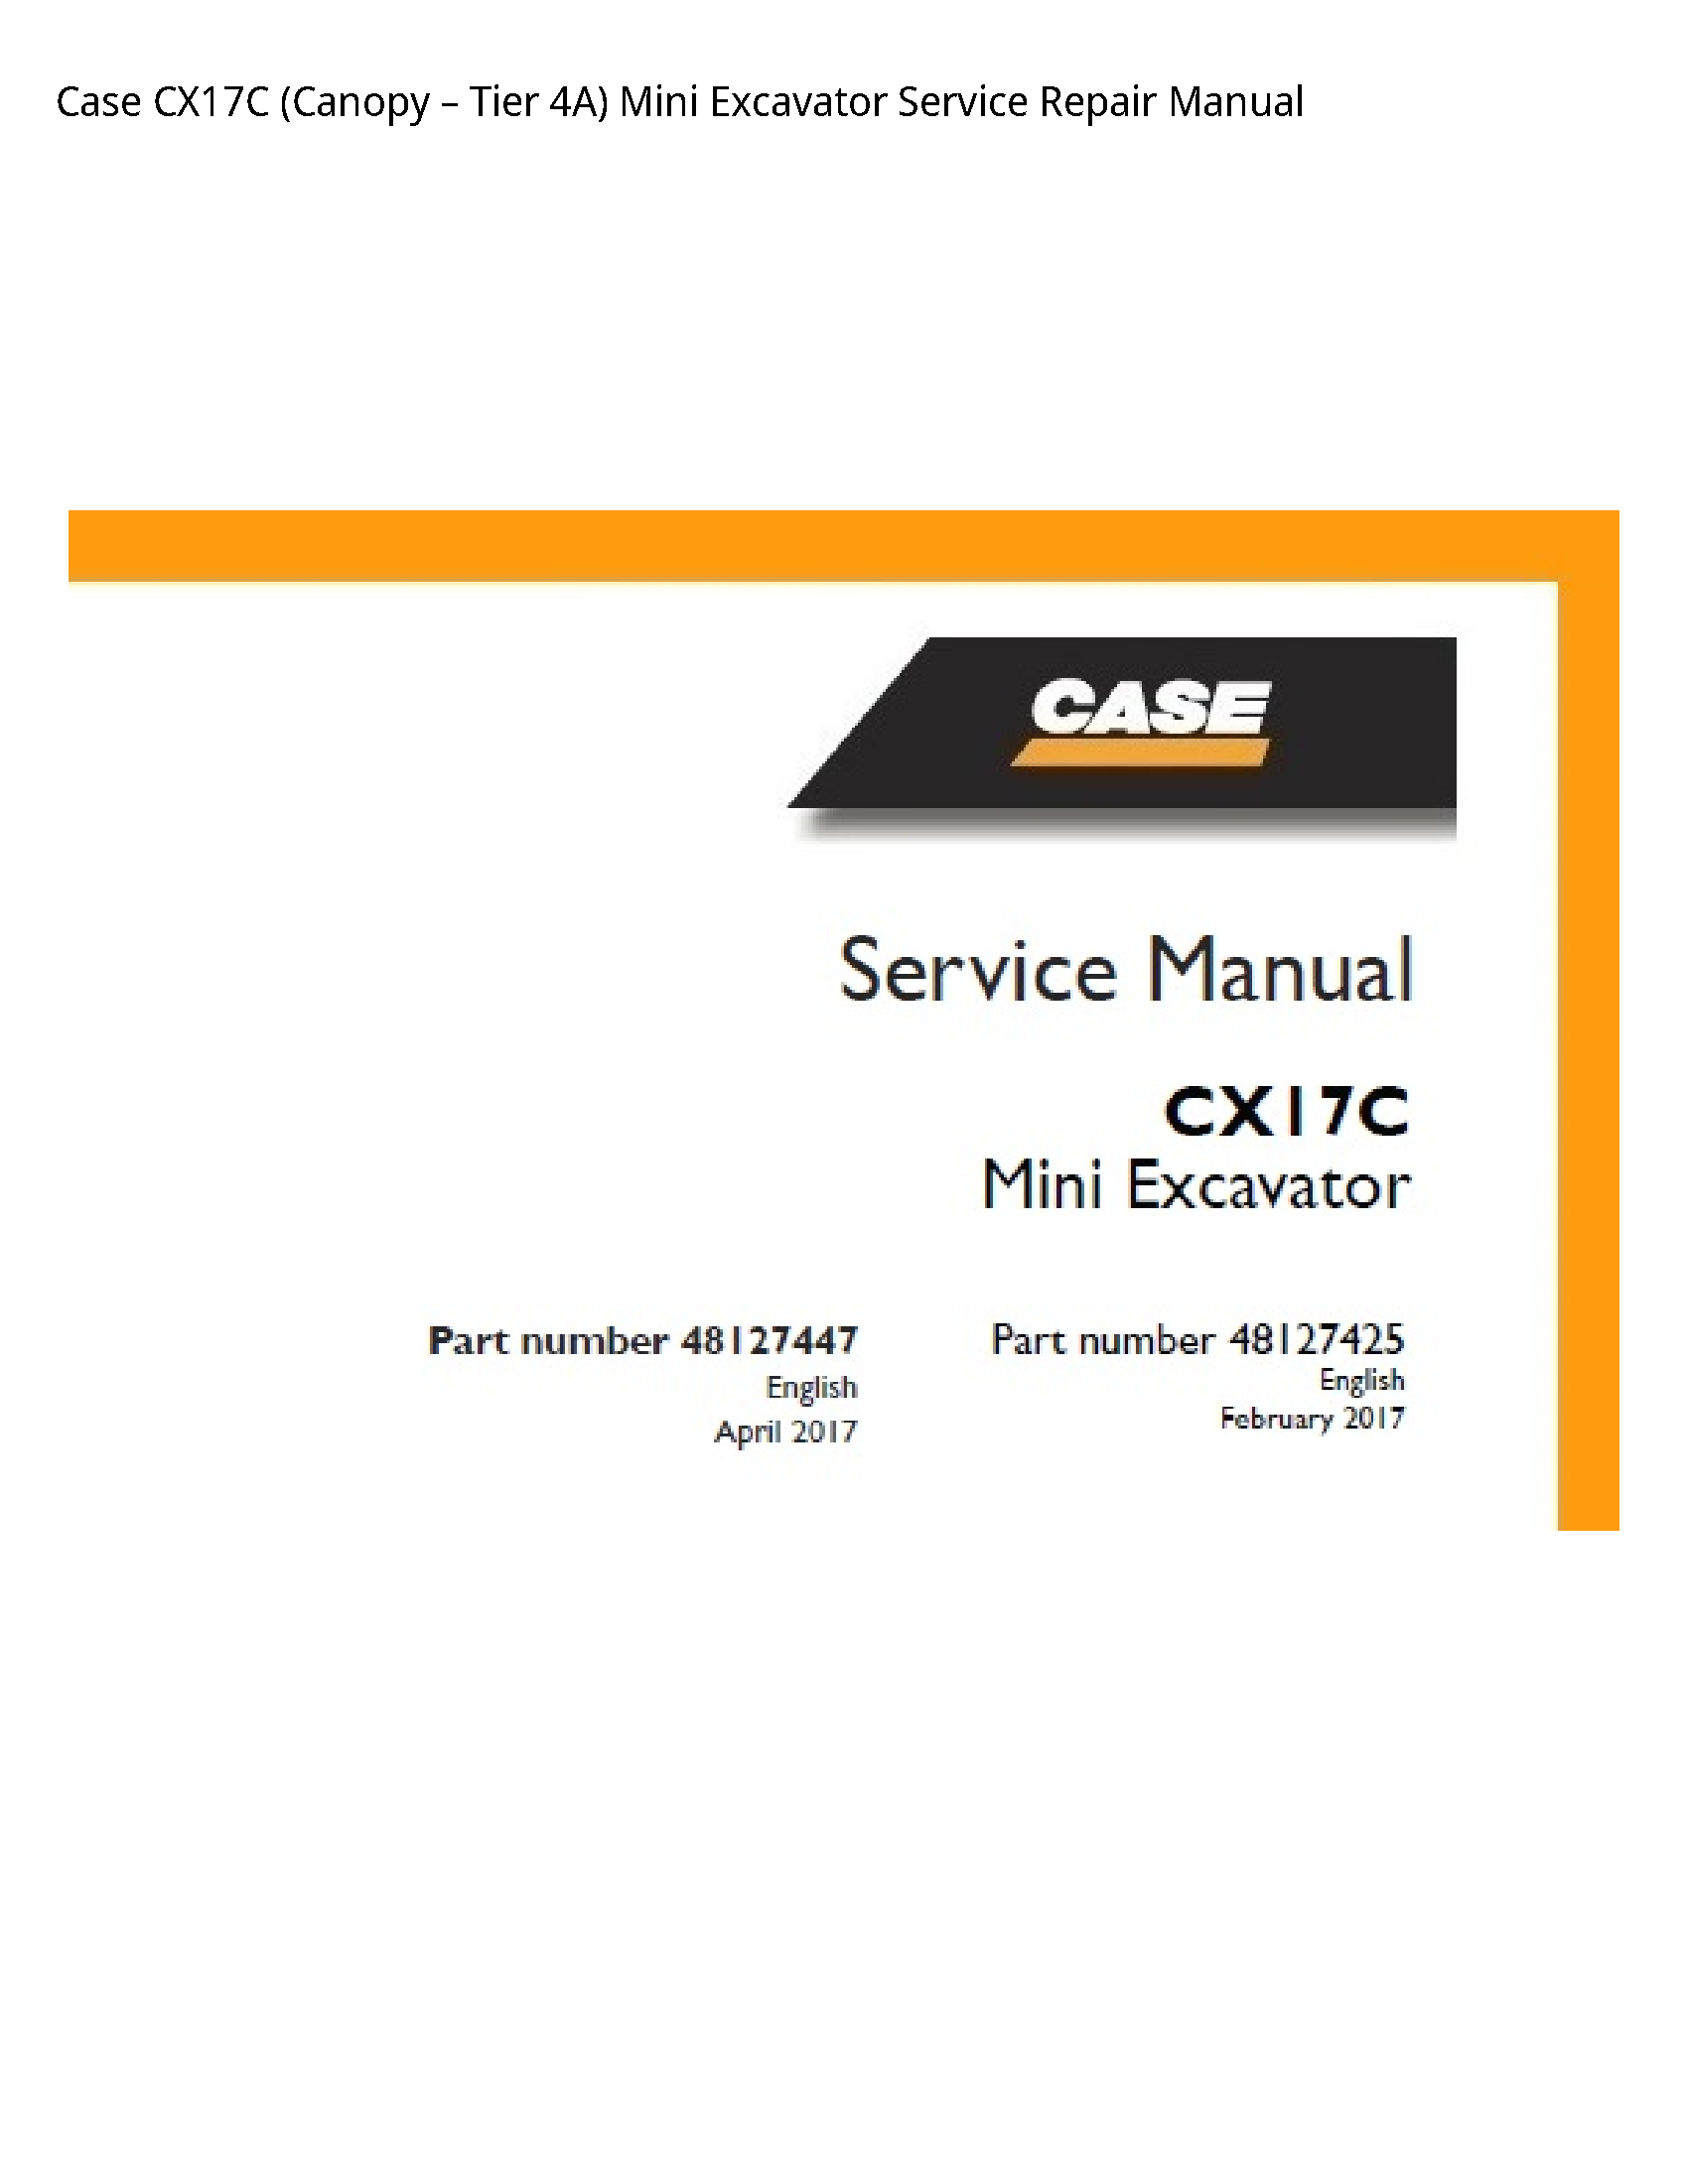 Case/Case IH CX17C (Canopy Tier Mini Excavator manual